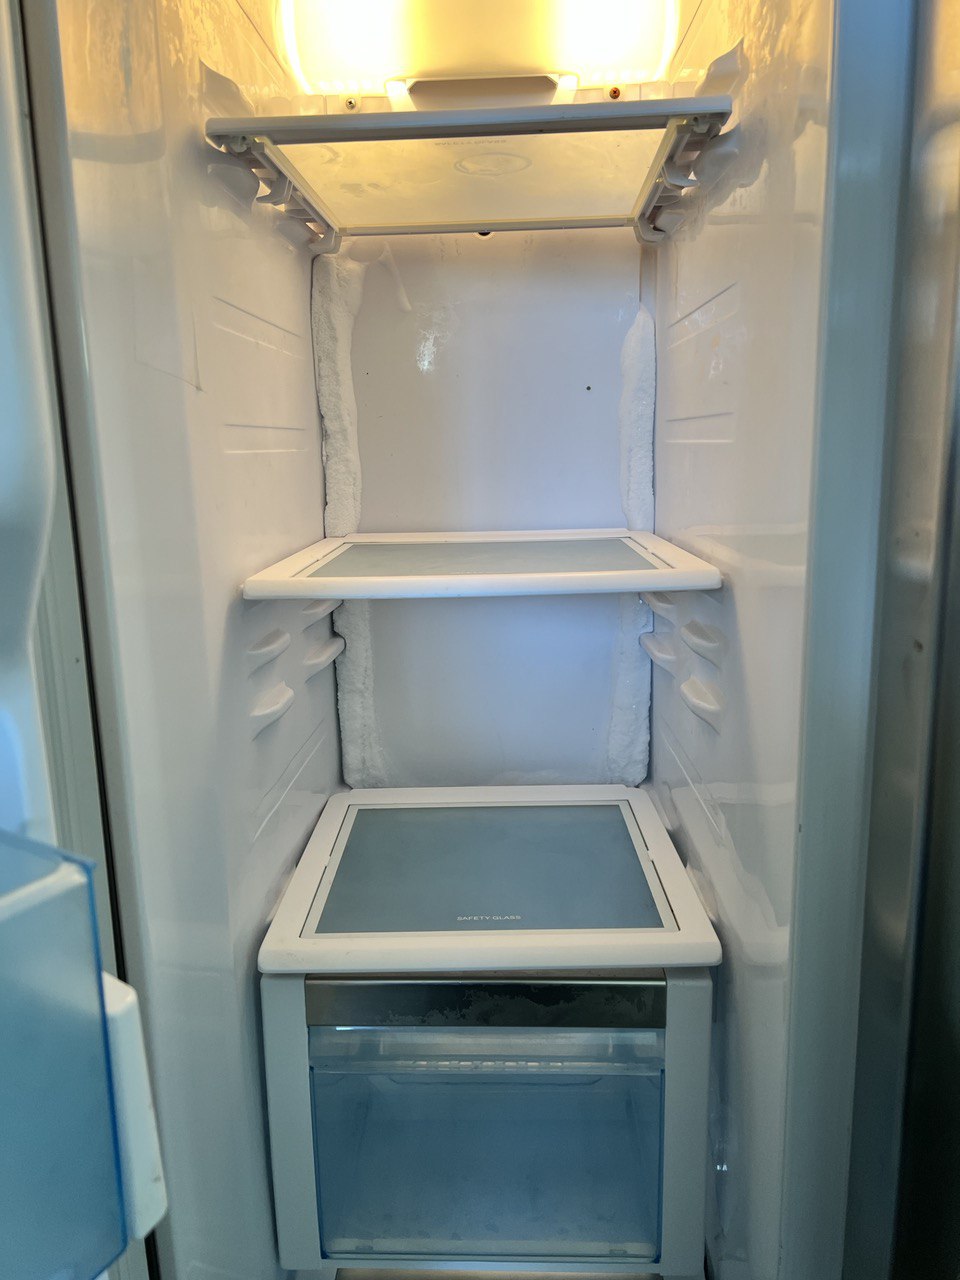 Fridge Bosch Repair Refrigerator Repair